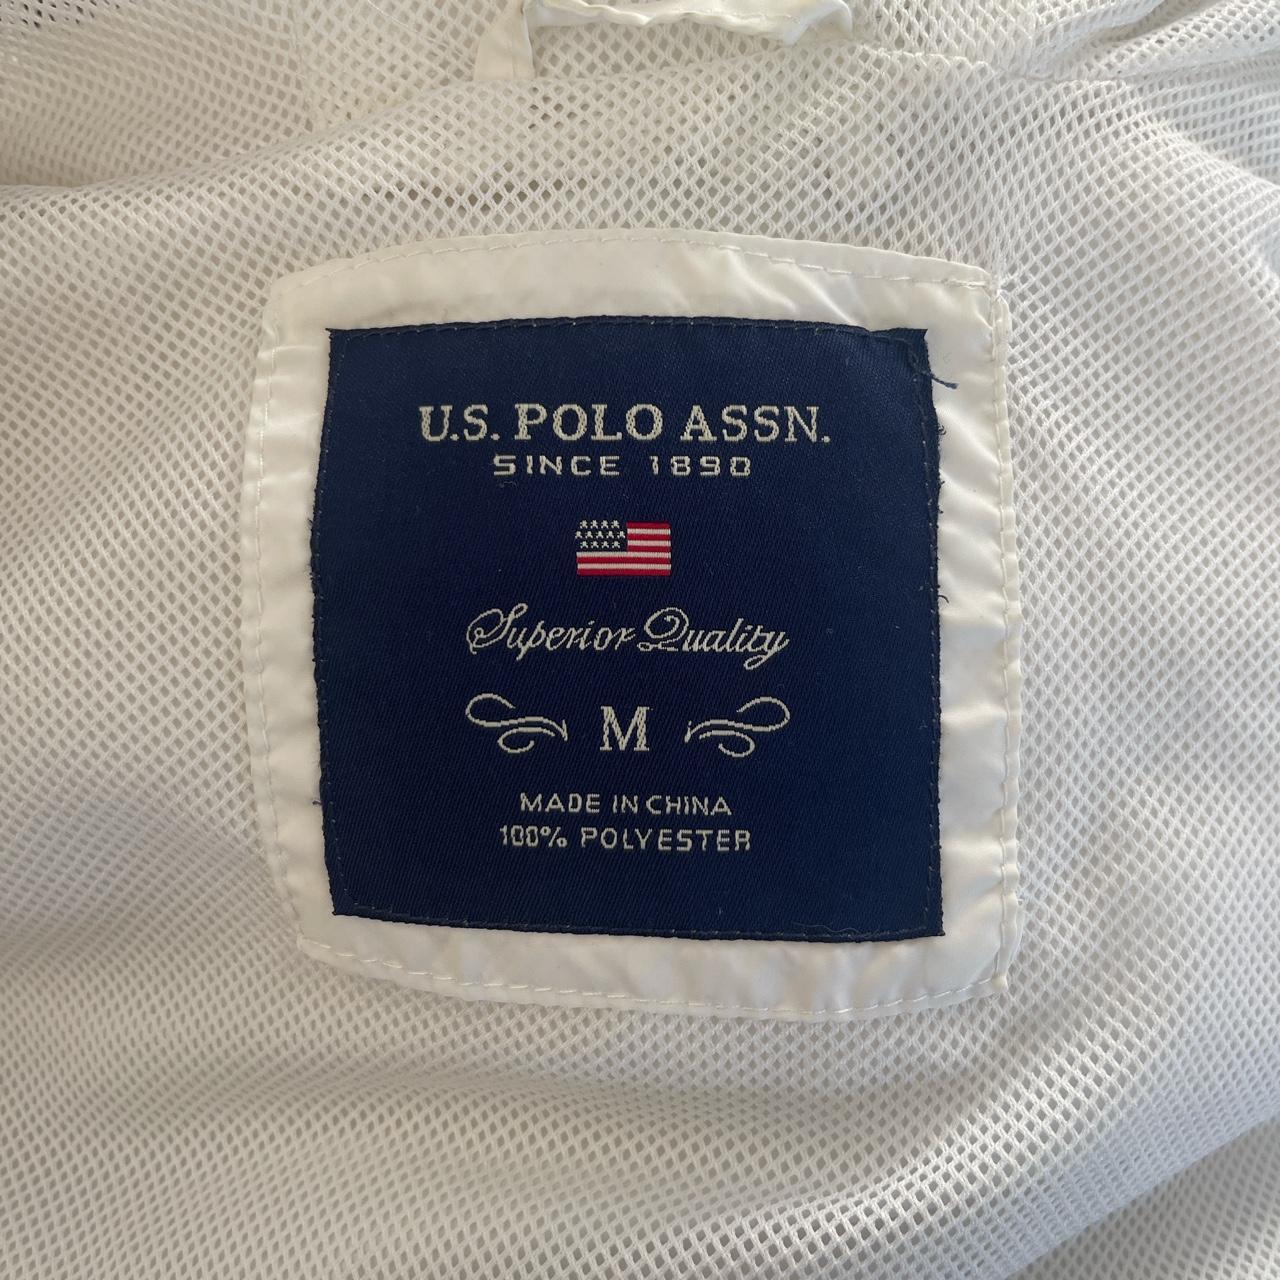 U.S. Polo Assn. Women's White and Cream Jacket (4)